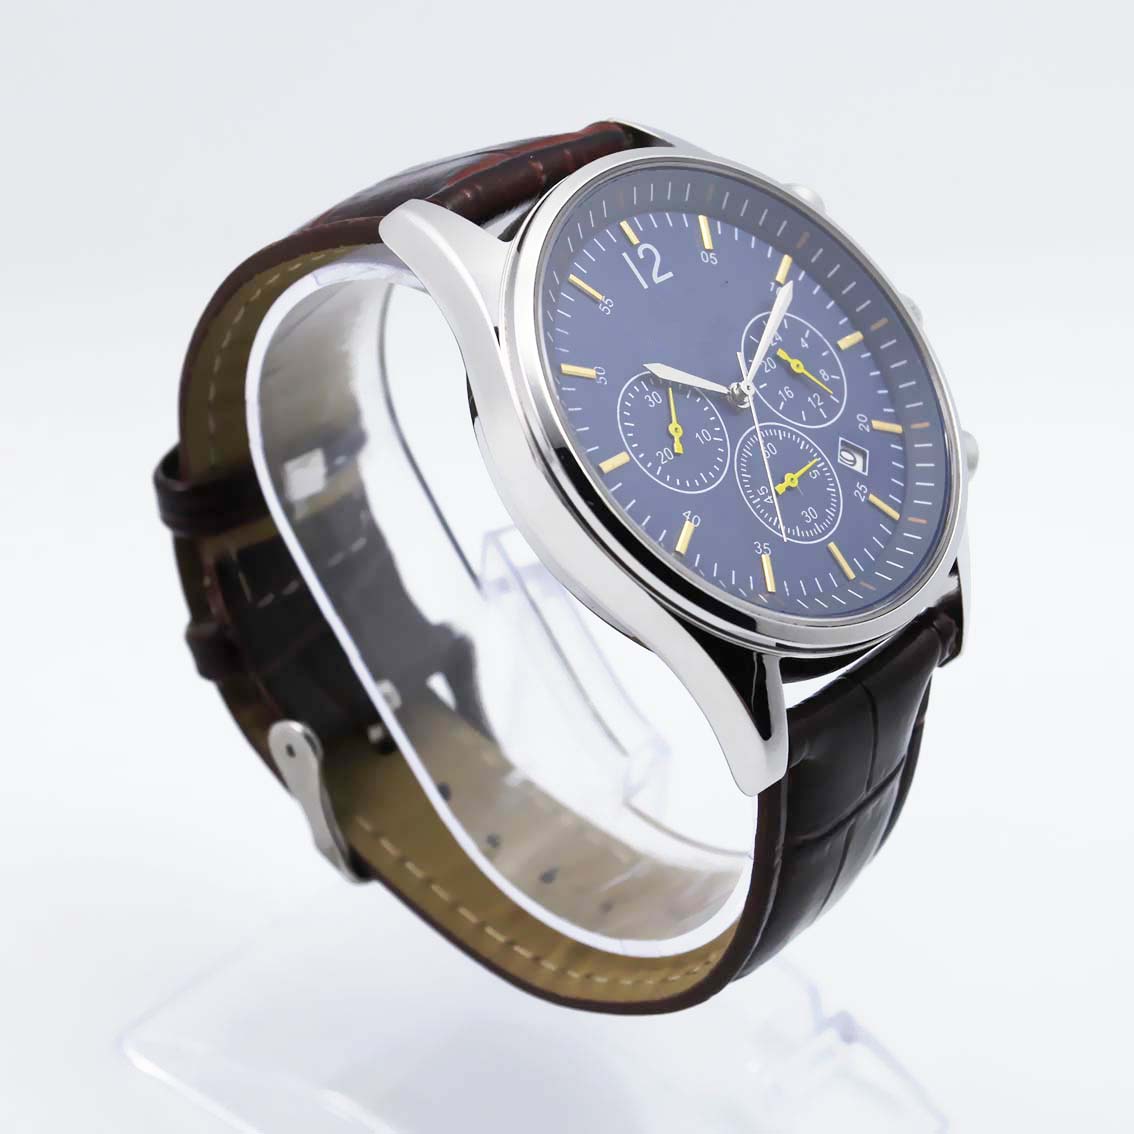 #02073Men's wristwatch quartz analog leather strap watch